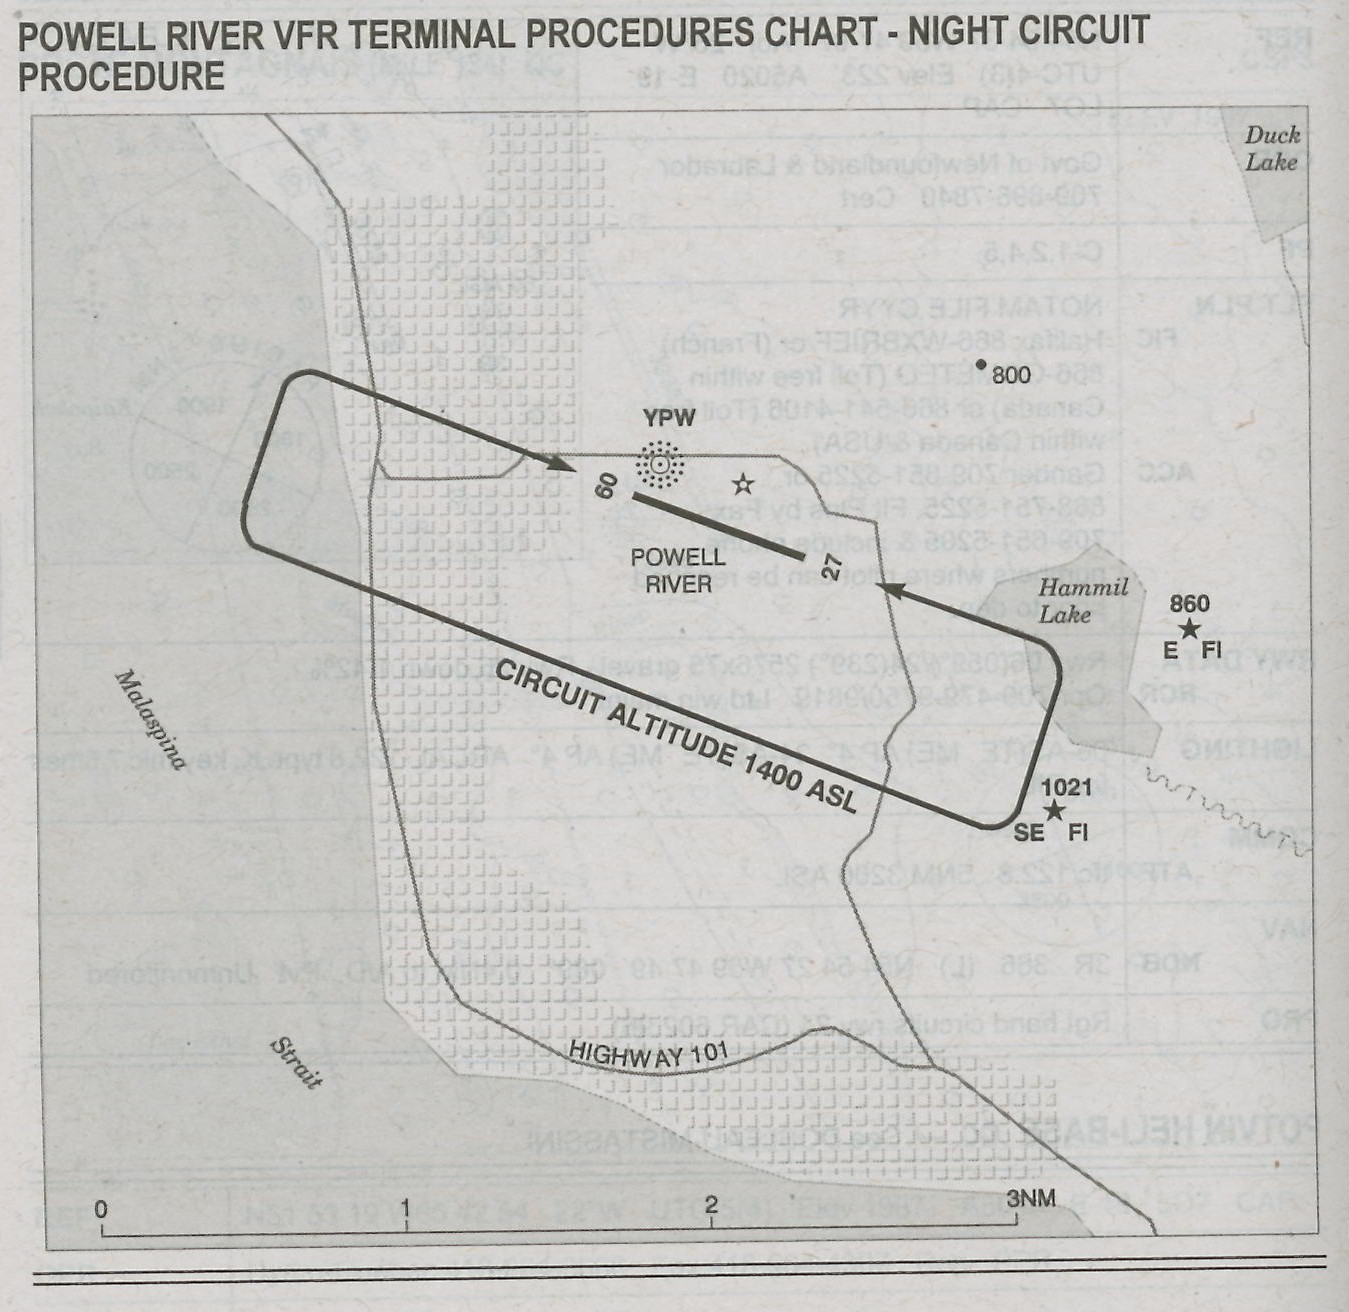 Power River Airport (Canada Flight Supplement), Langley Flying School.